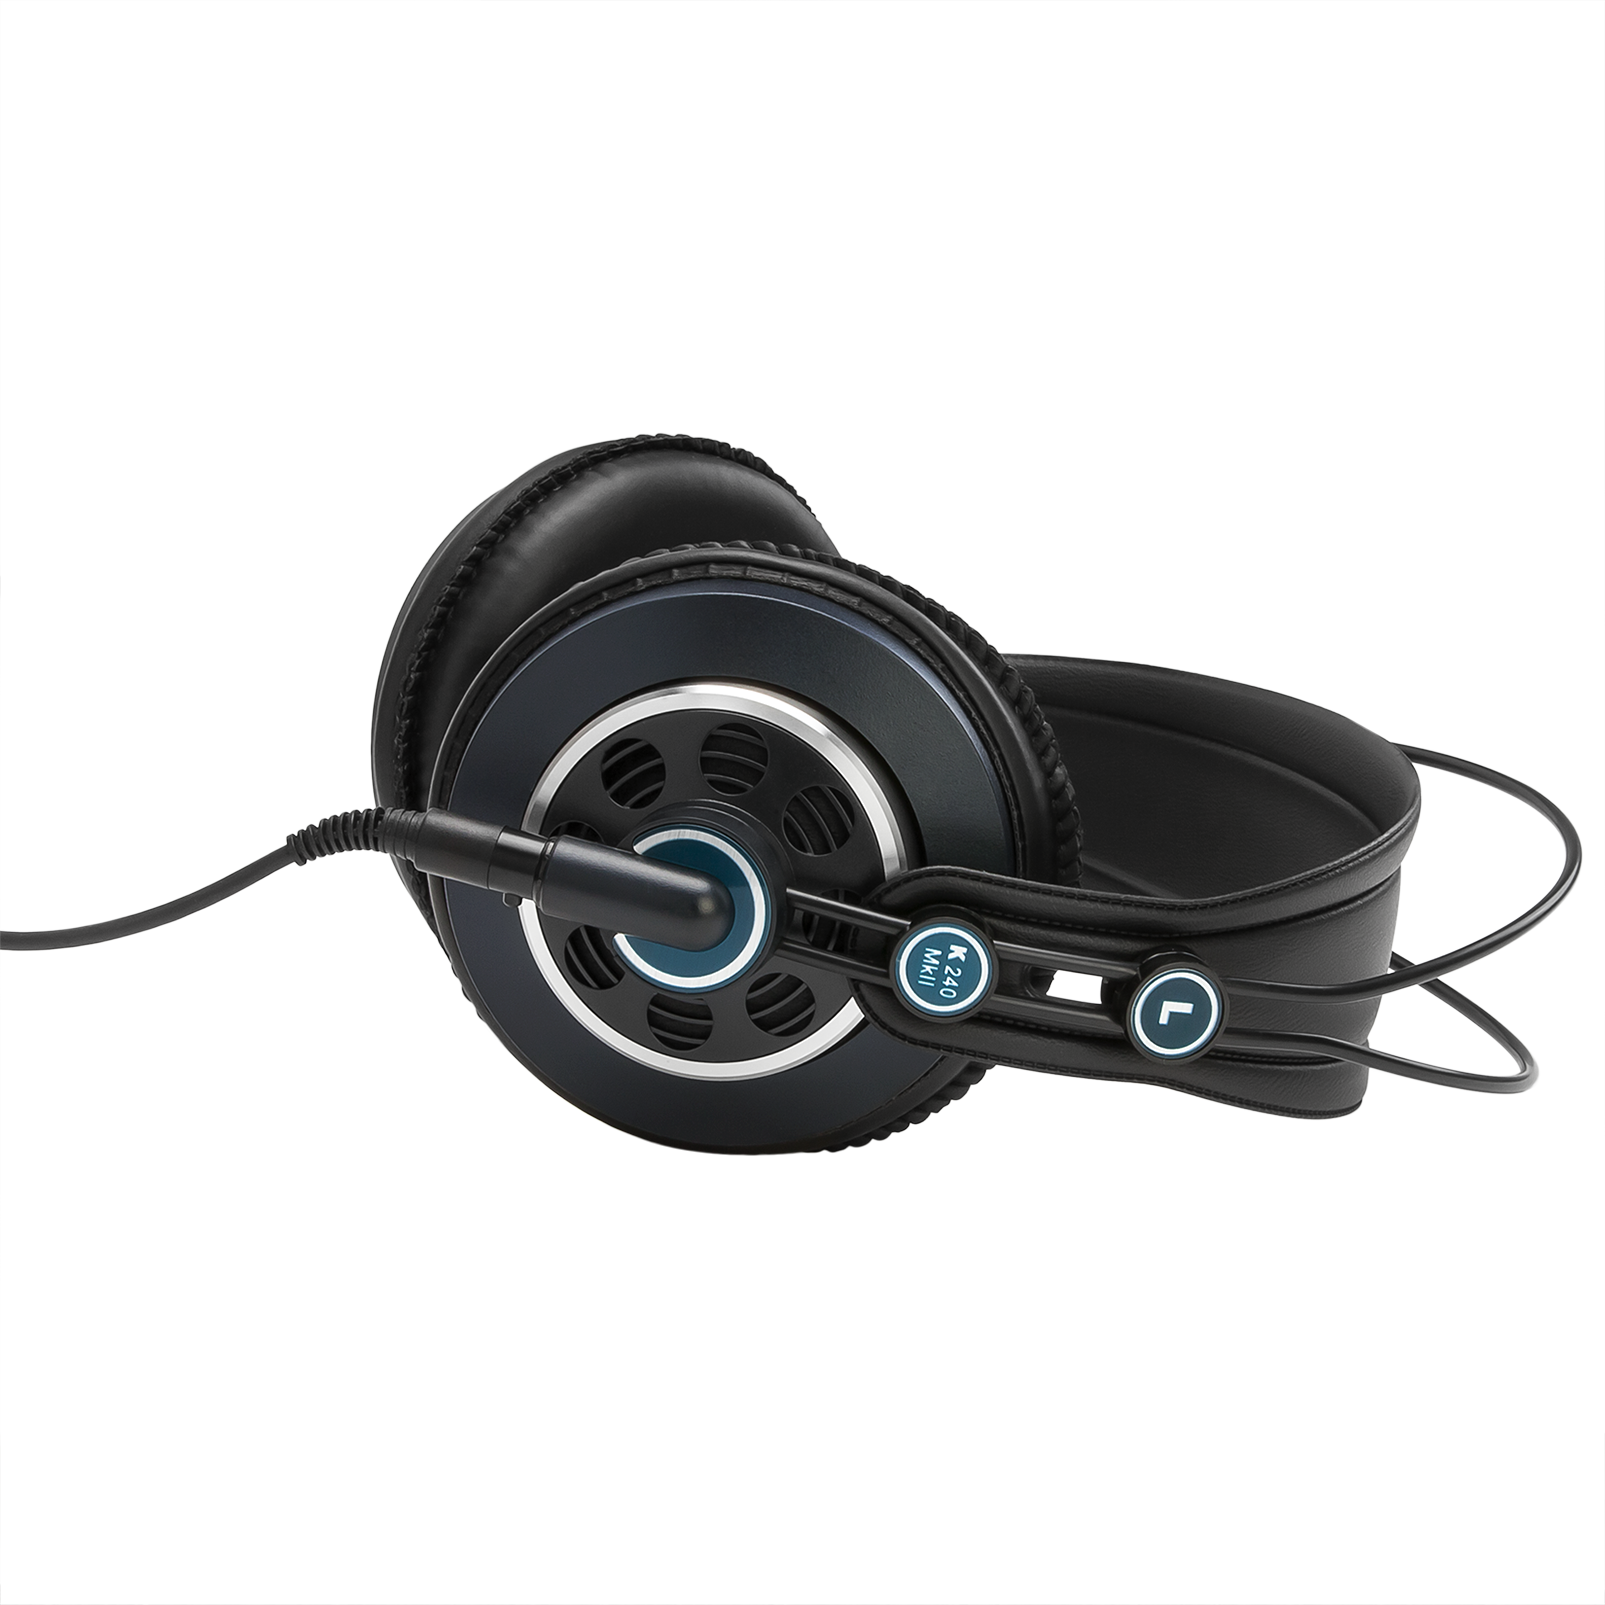 K240 STUDIO  Professional studio headphones